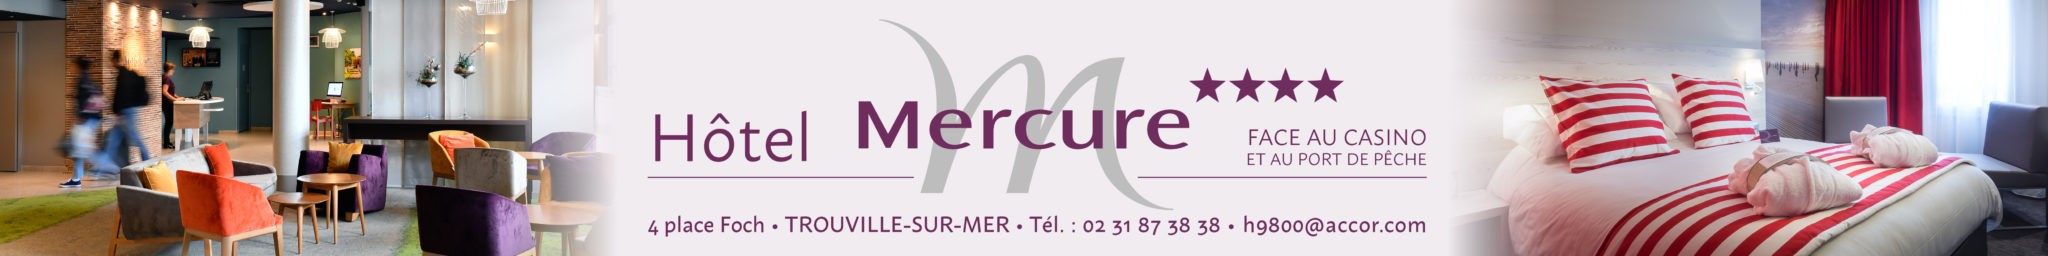 Mercure-hotels